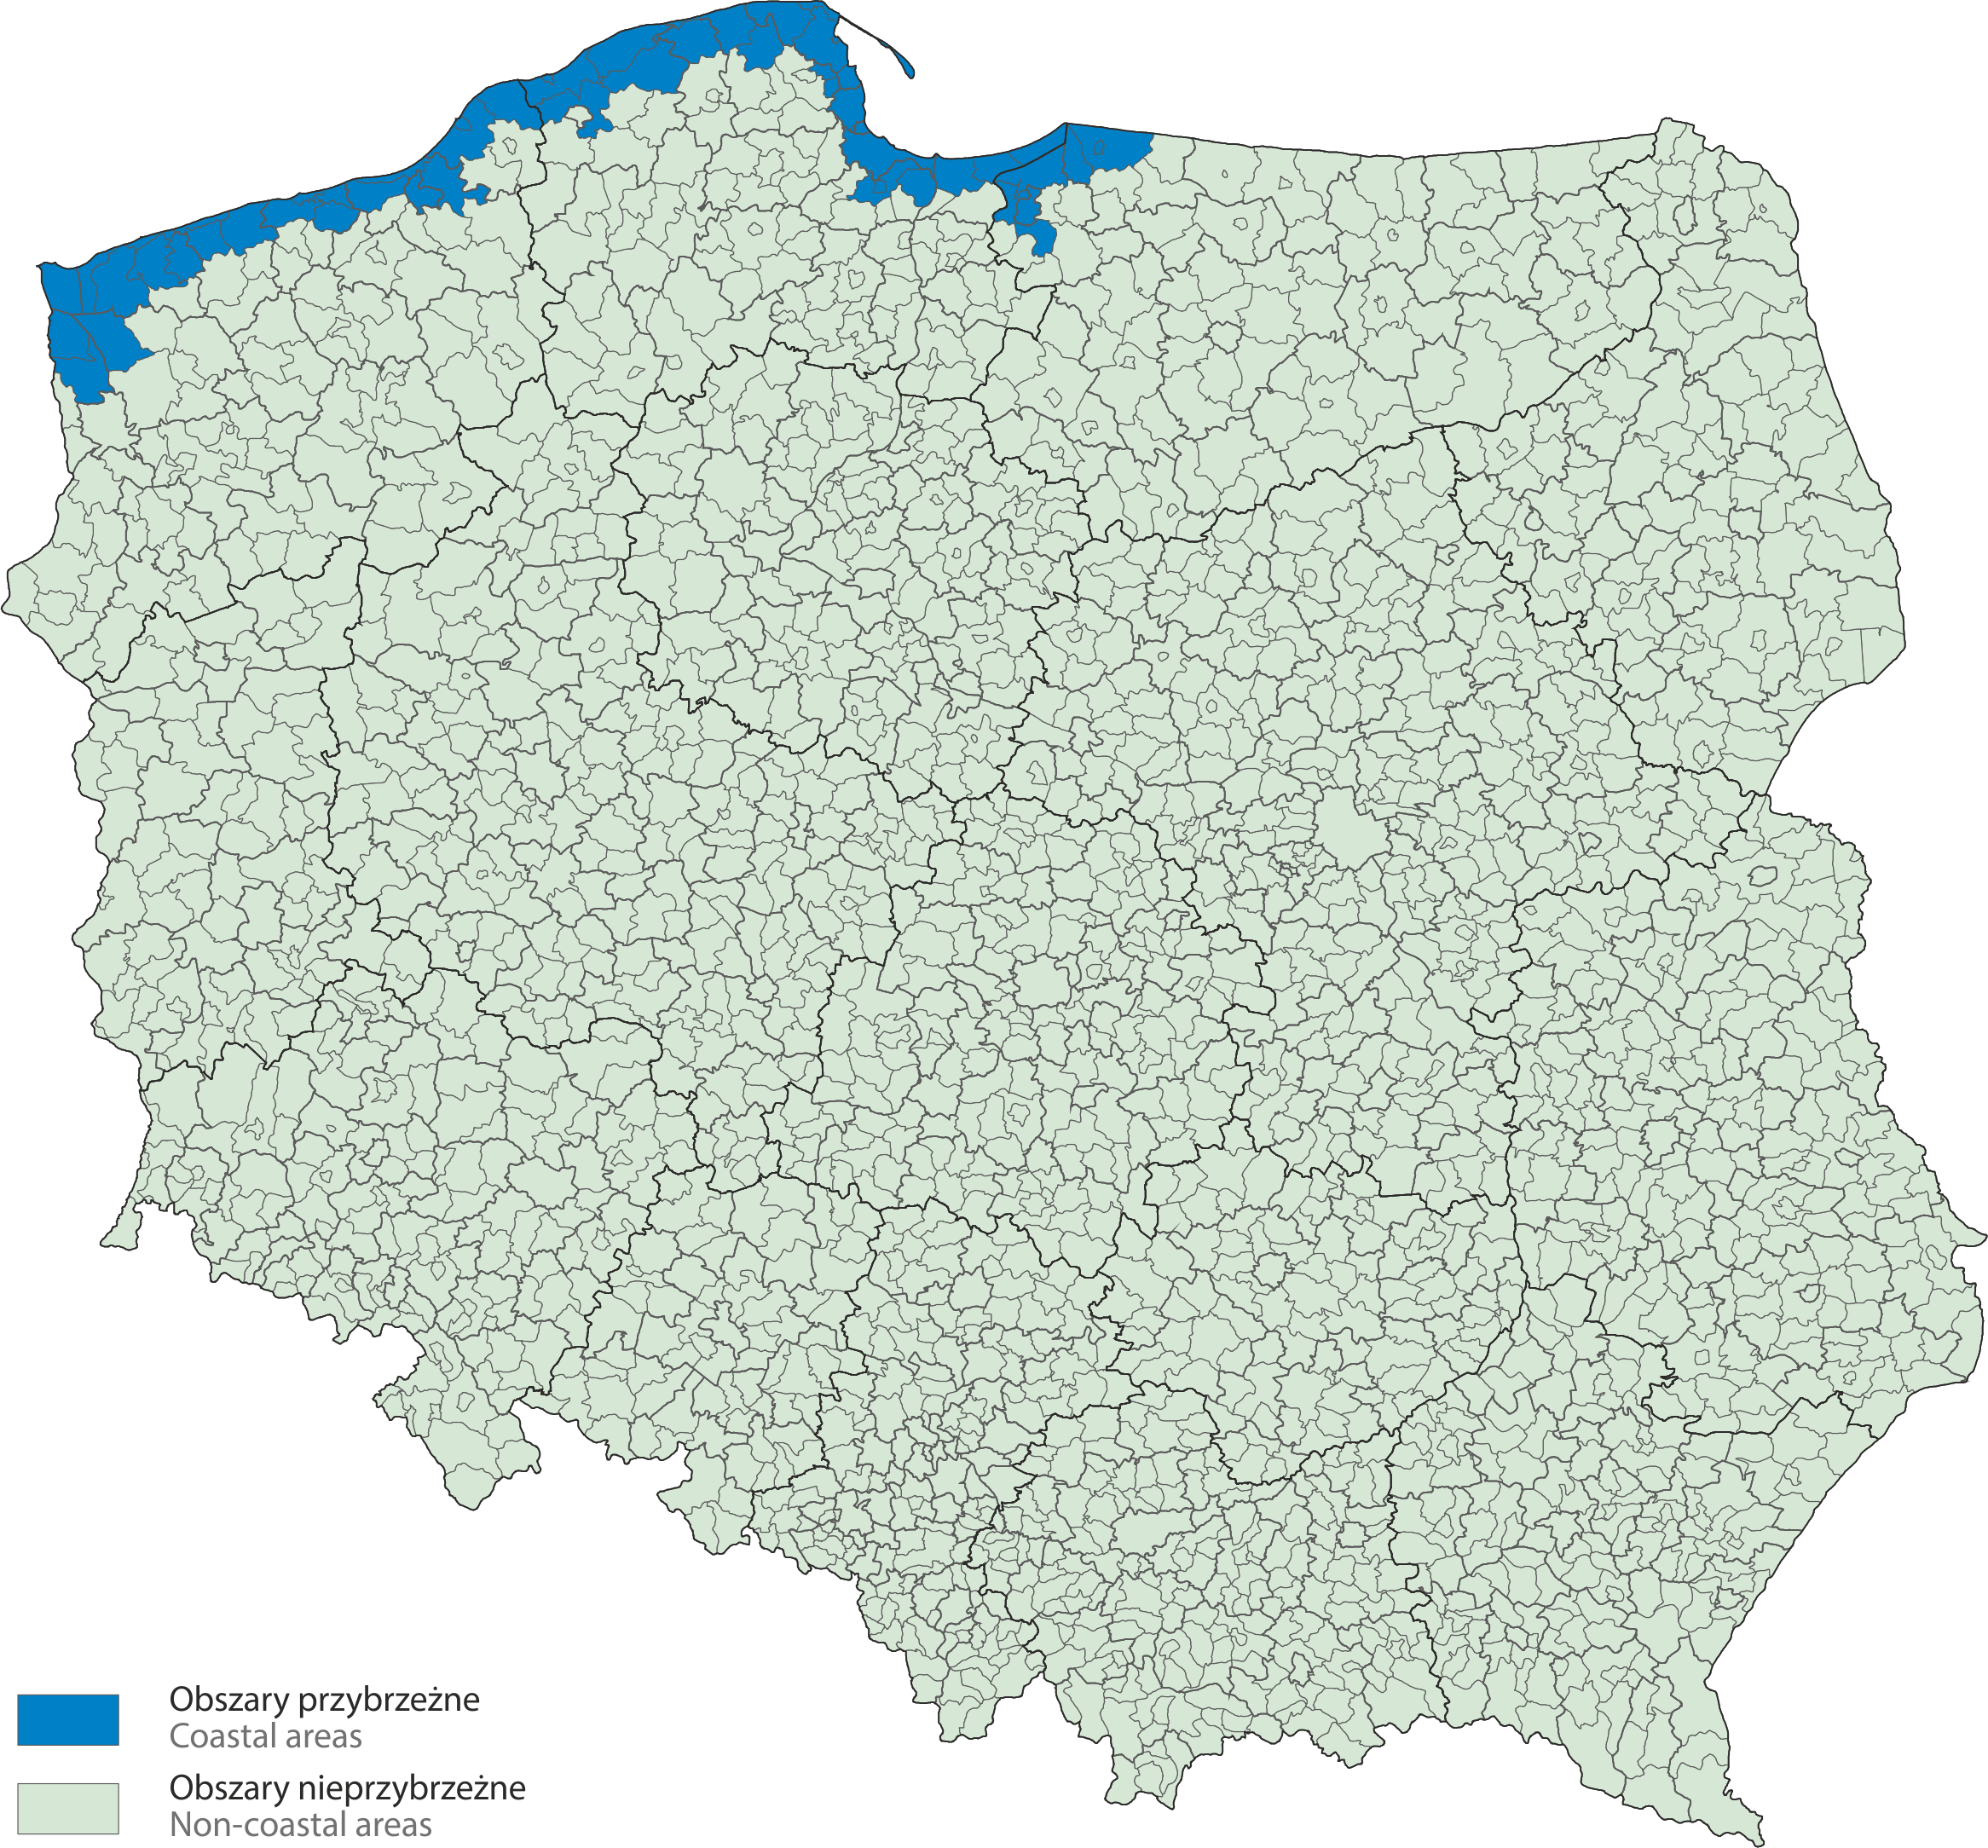 Coastal and non-coastal areas in Poland in 2018